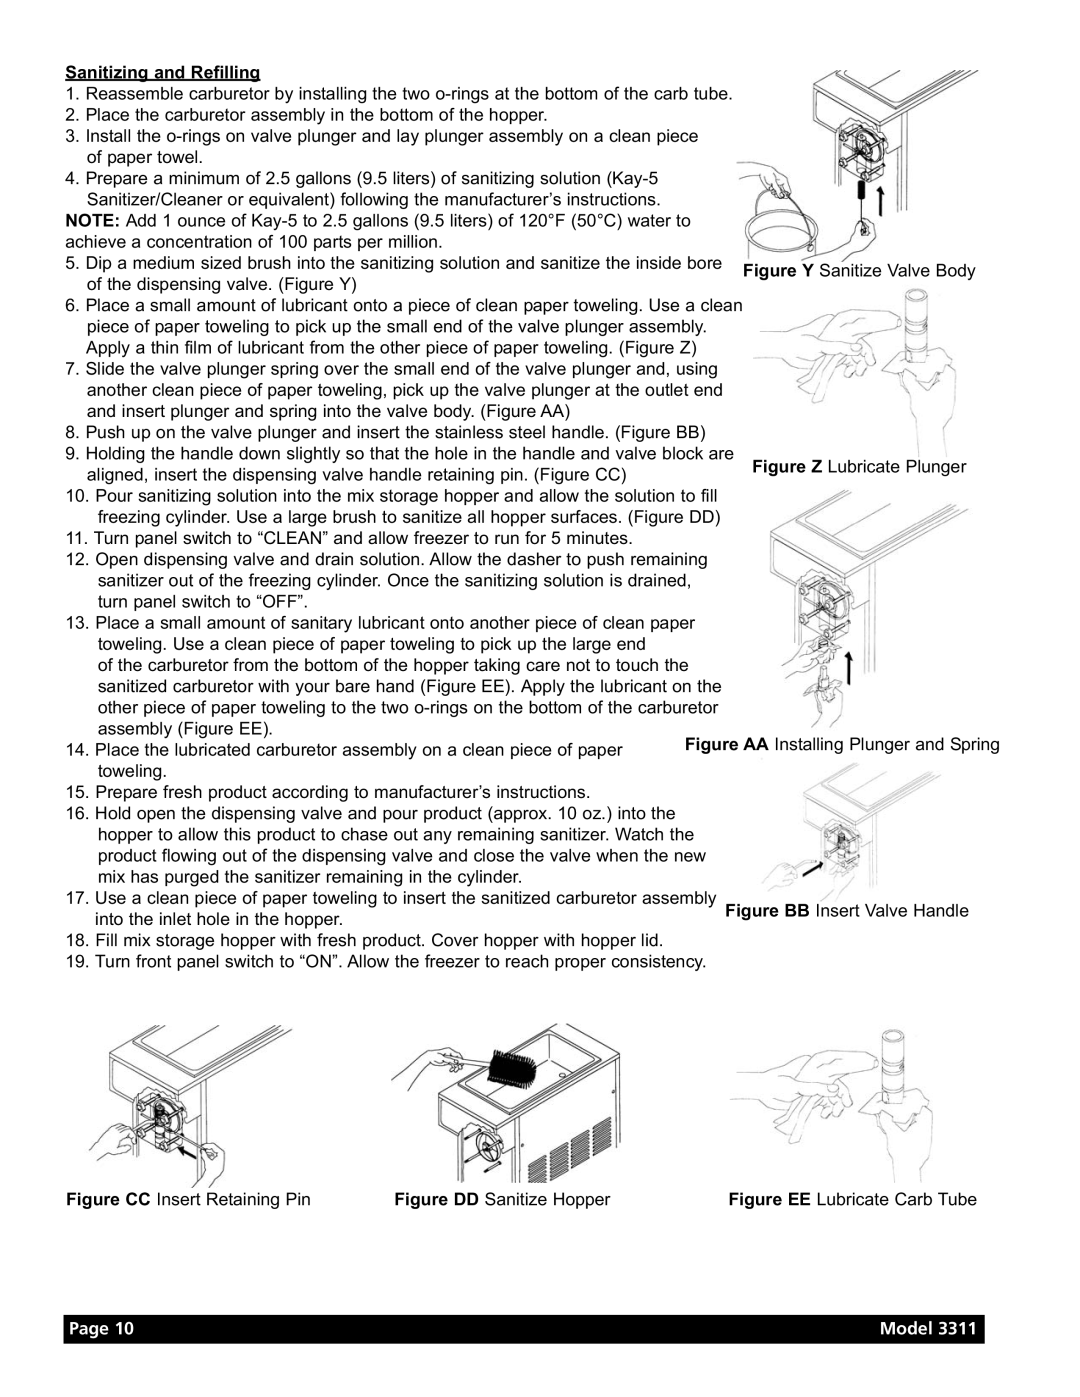 Grindmaster Model 3311 manual Sanitizing and Refilling, Figure CC Insert Retaining Pin, Figure DD Sanitize Hopper, Page 